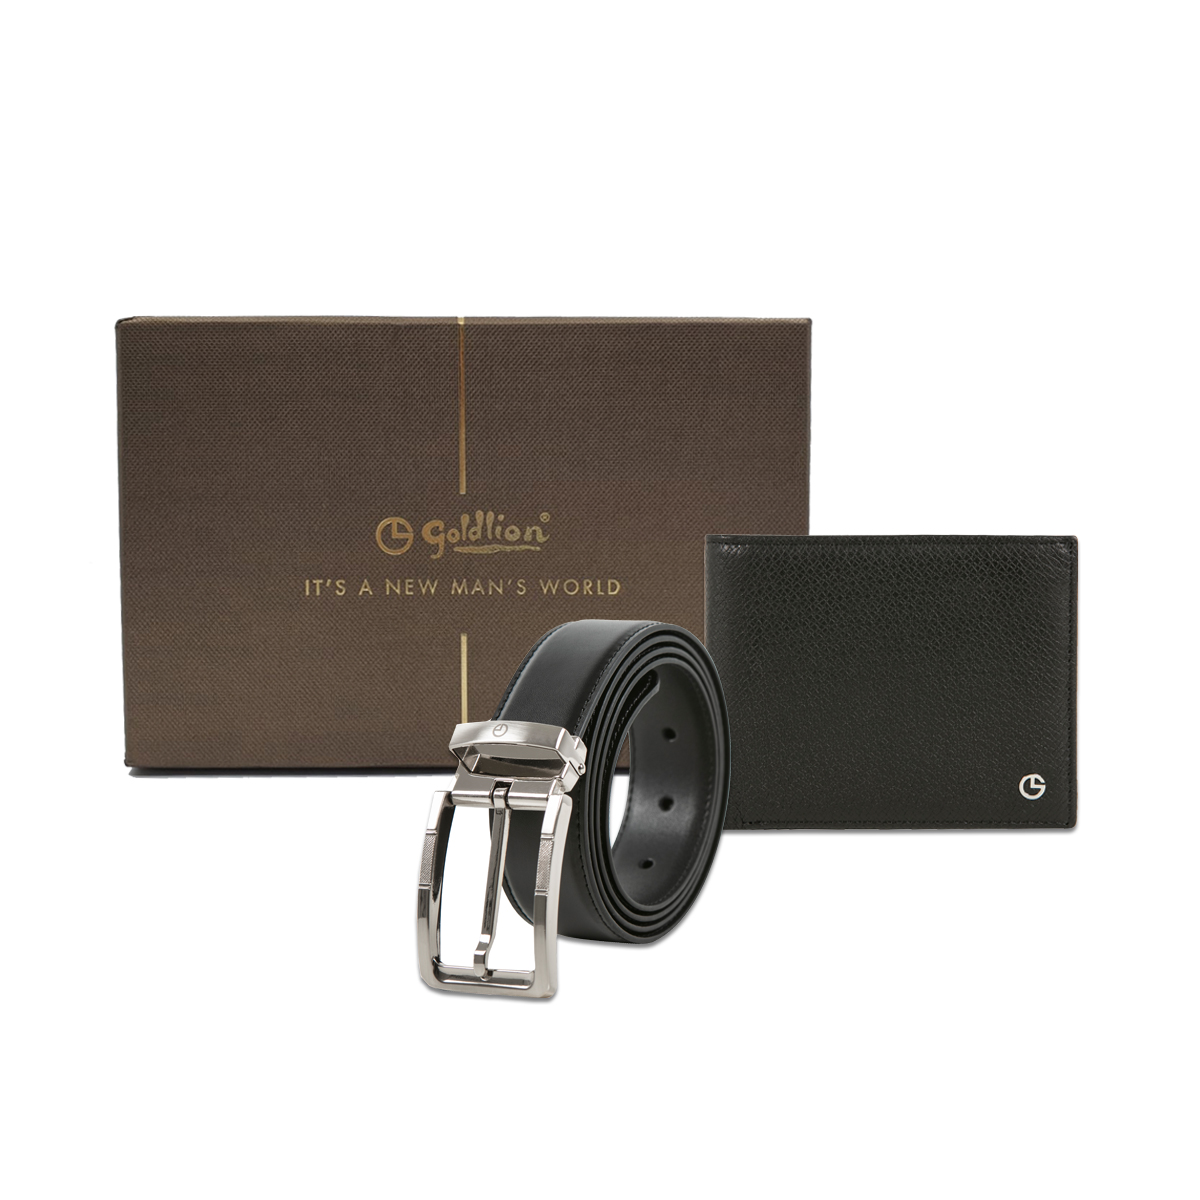 Goldlion Genuine Leather Wallet & Leather Pin Belt Gift Set - Black (OBB371+EWH113)